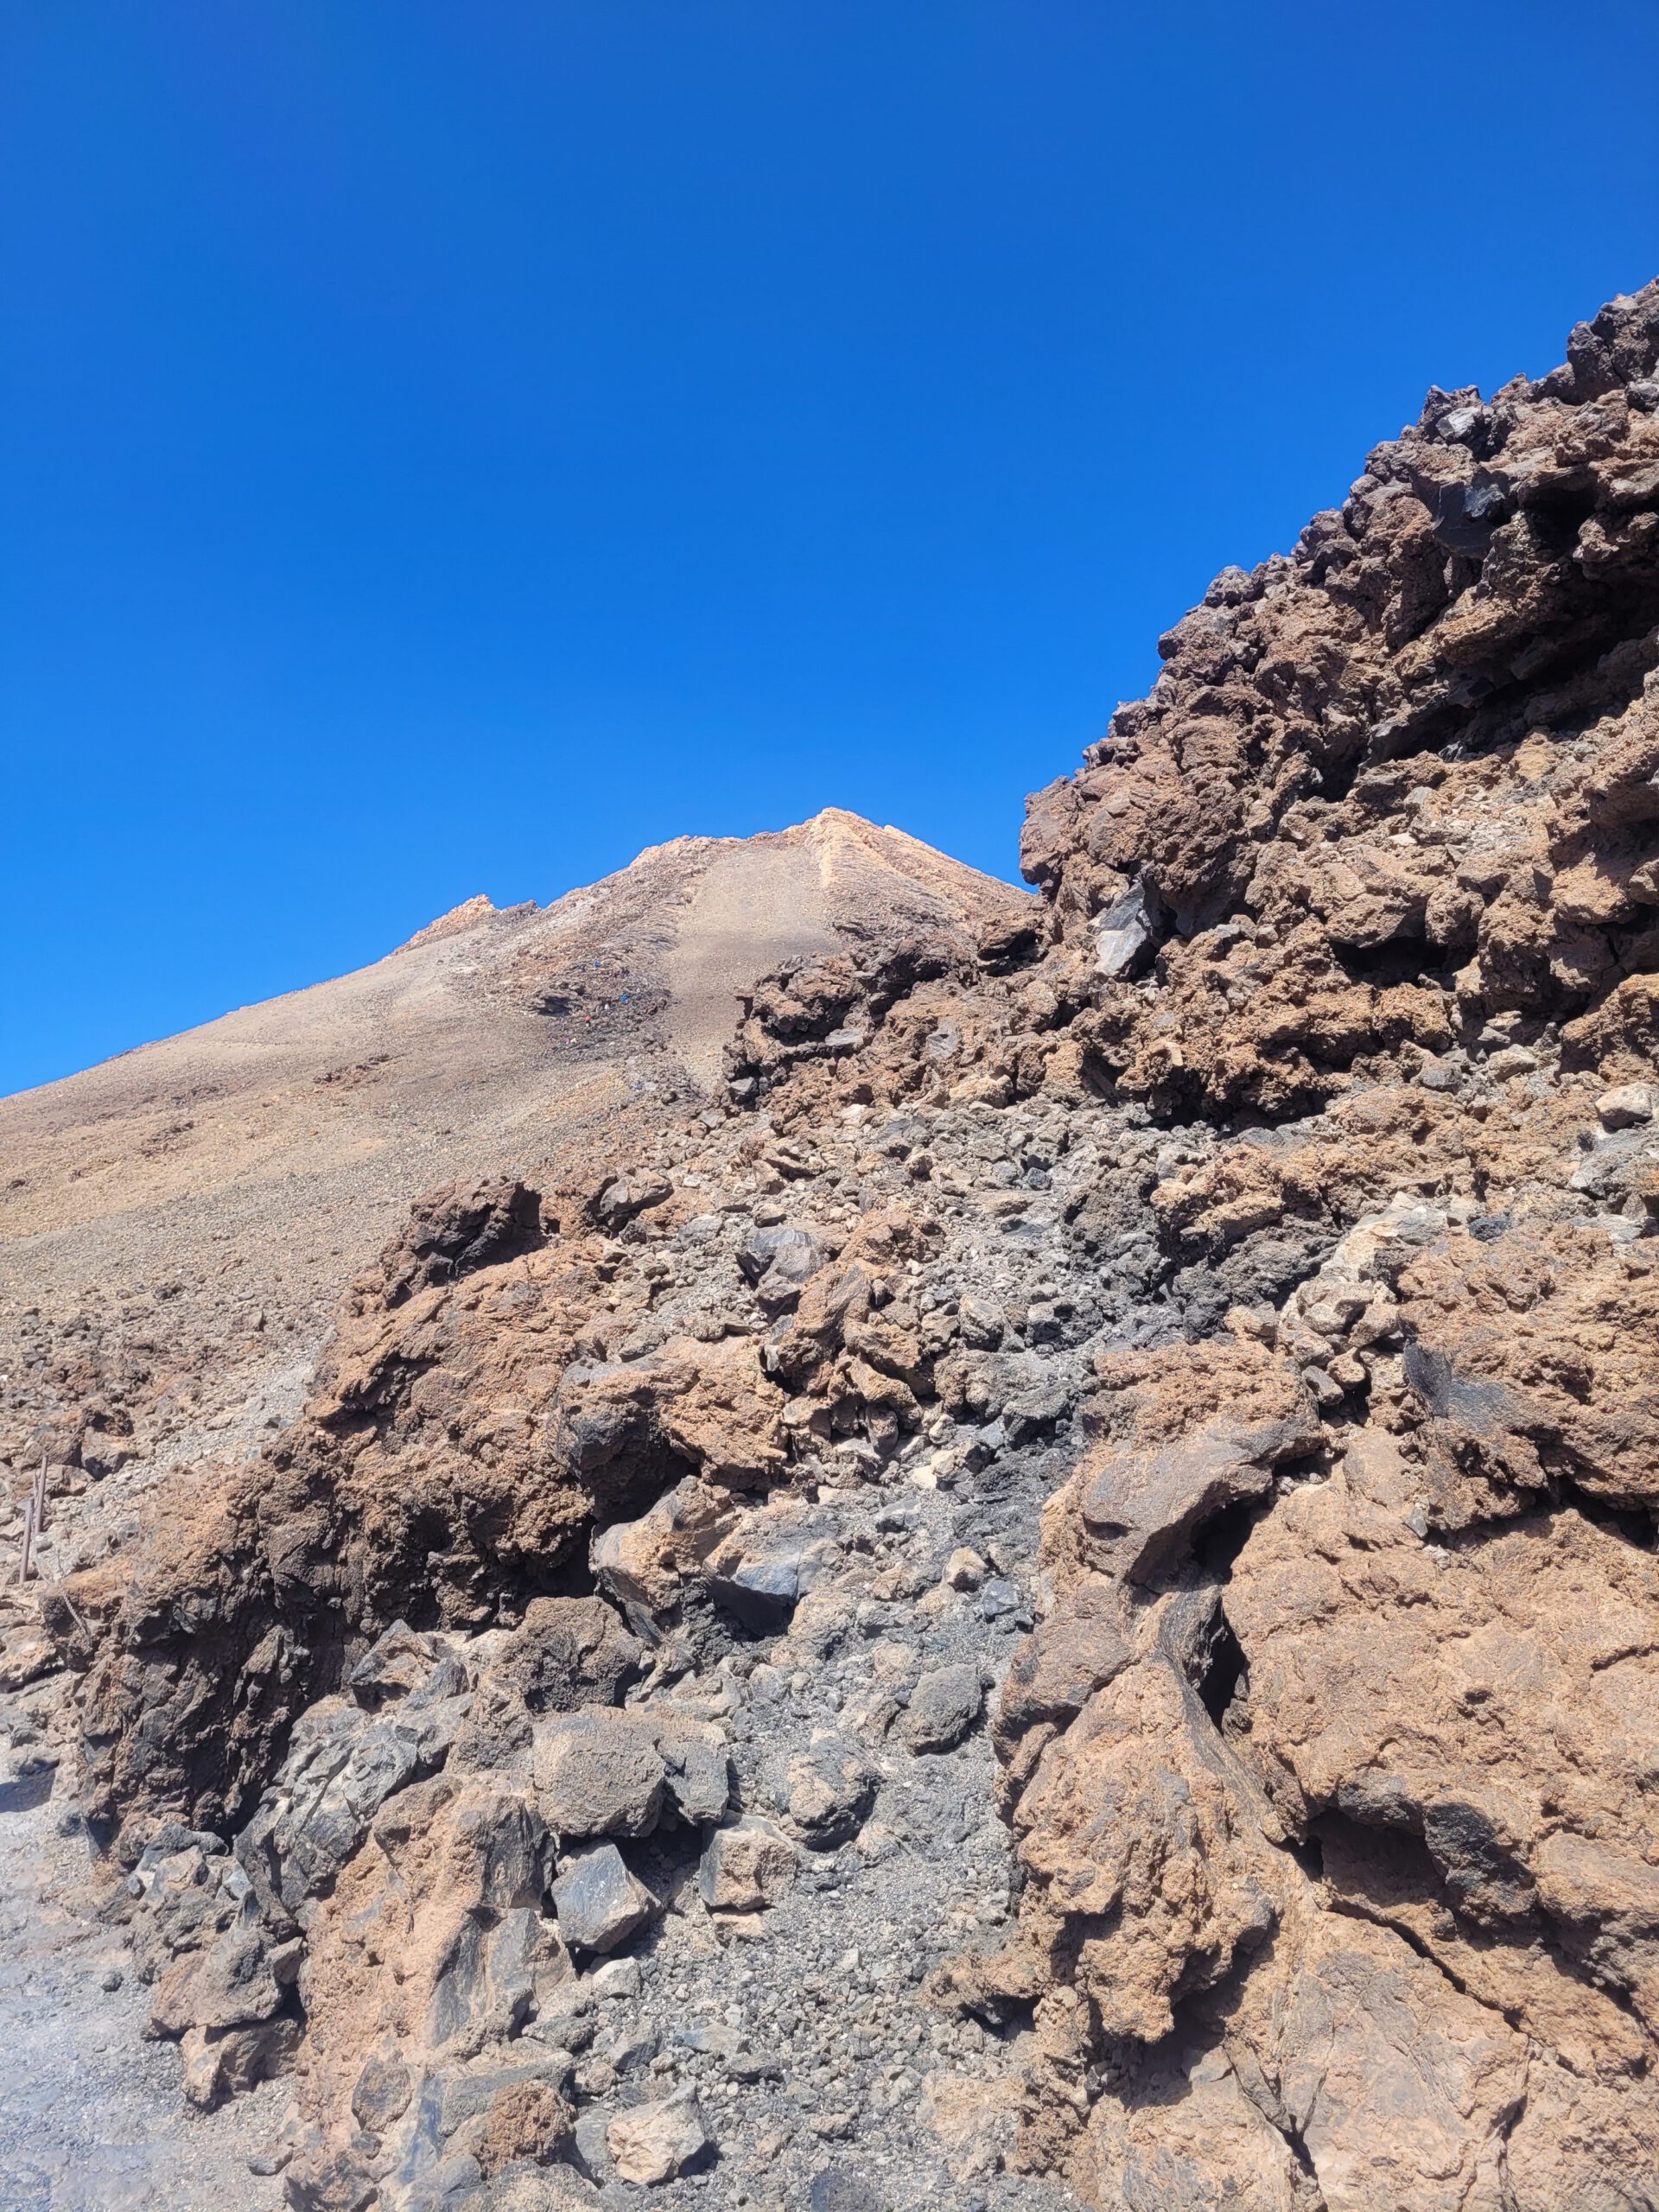 Blick auf den Pico del Teide in Teneriffa